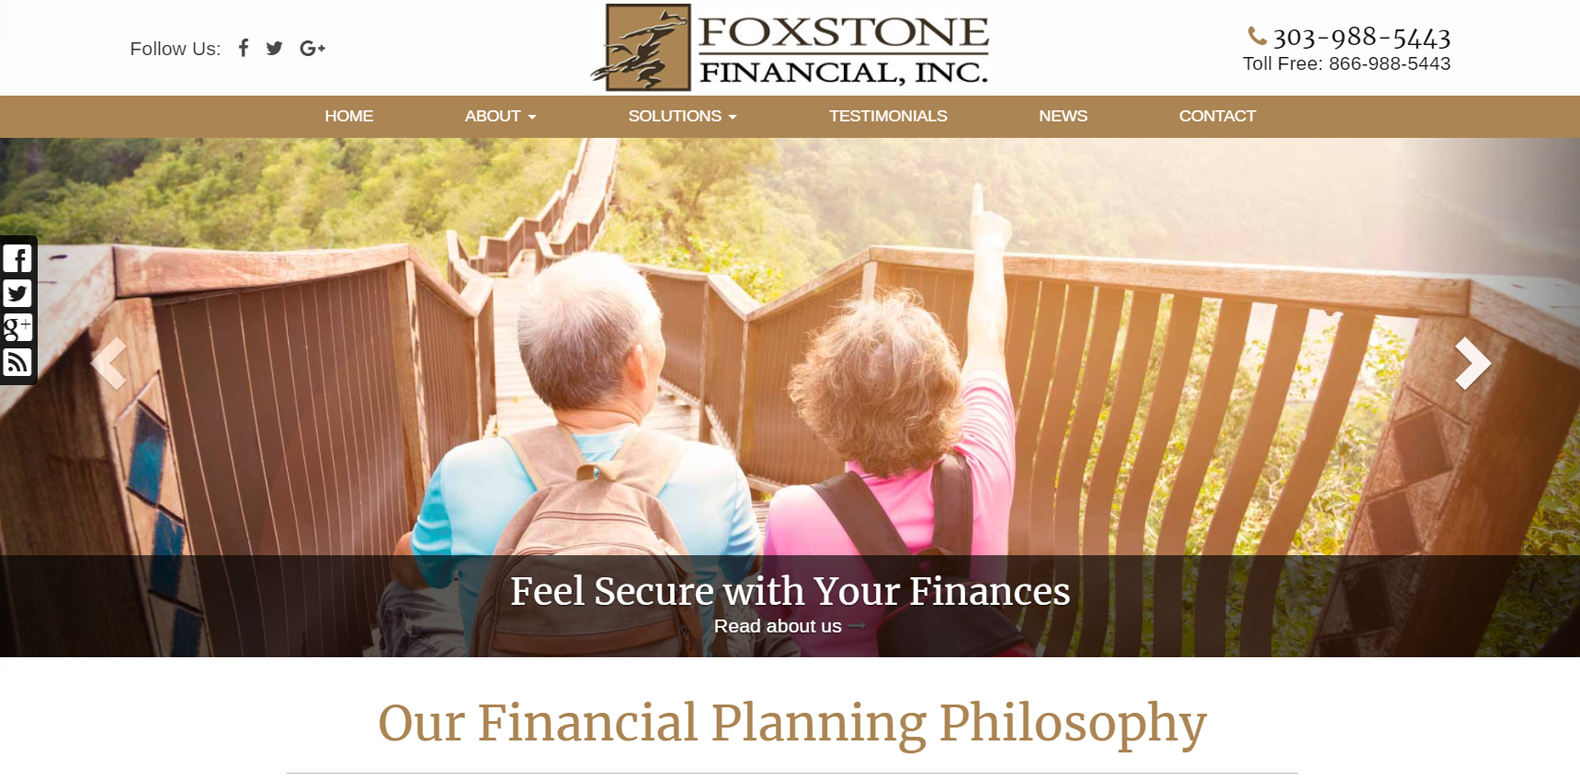 
New Website Launch: Foxstone Financial